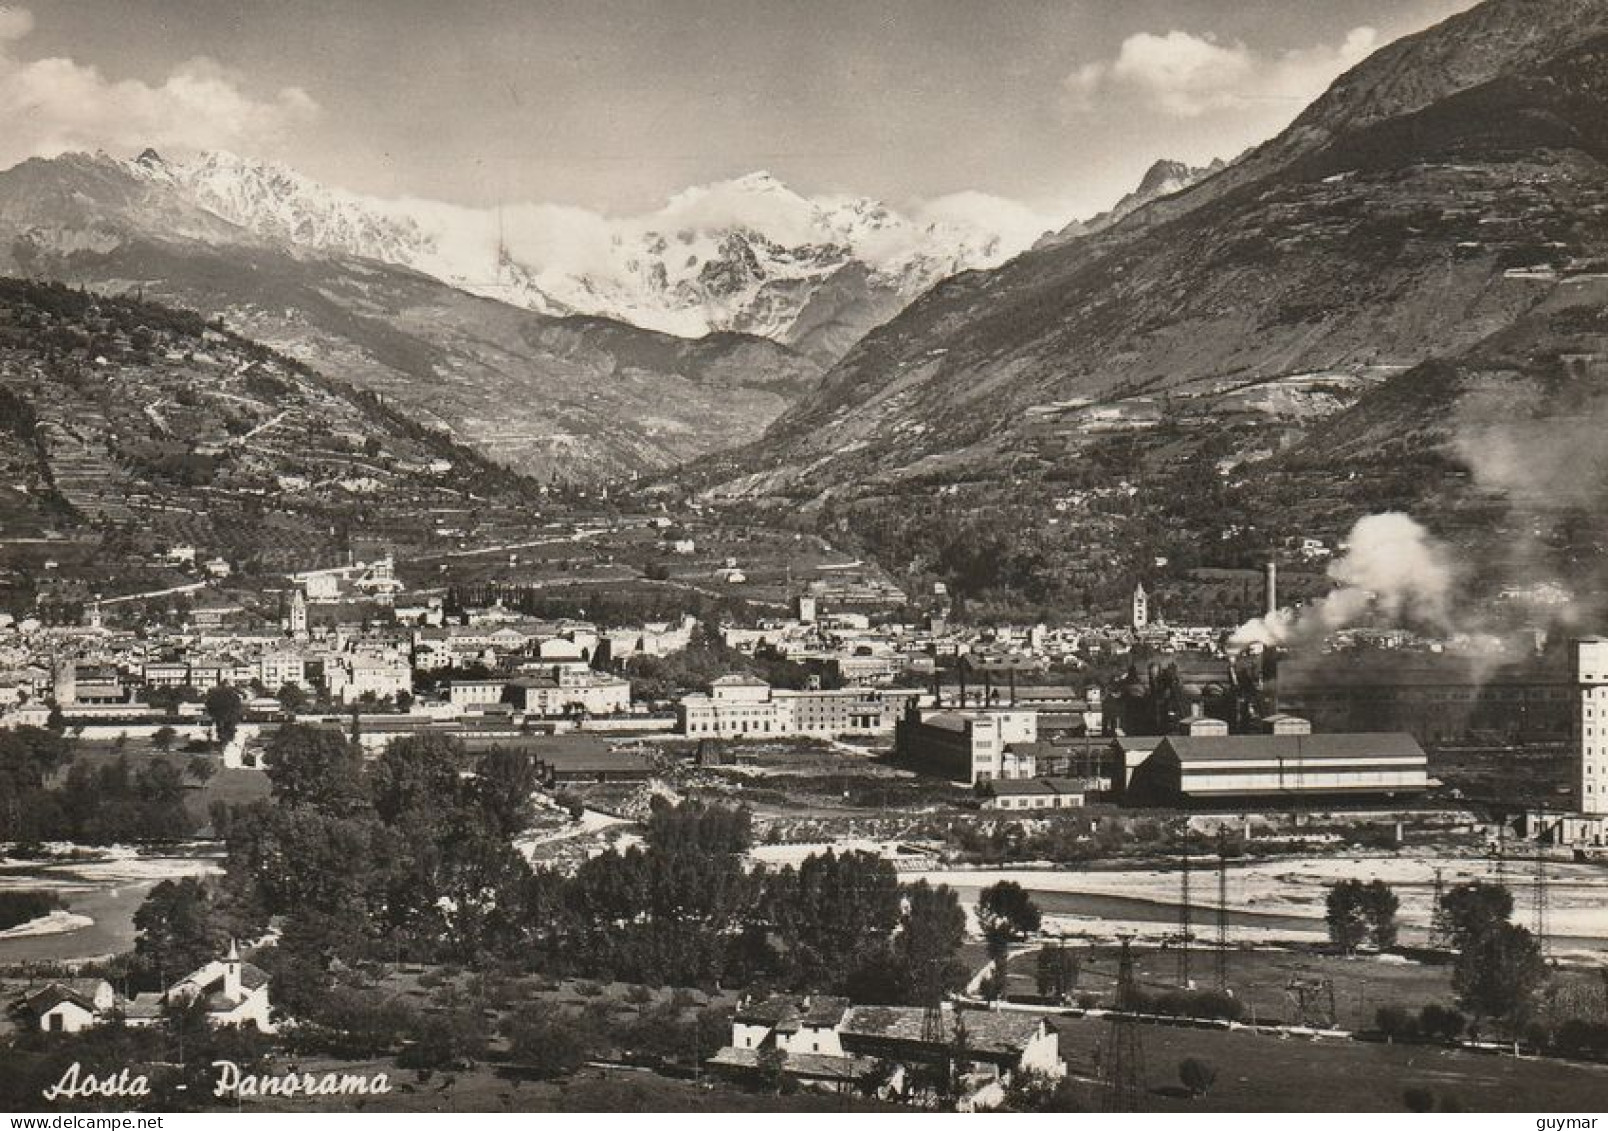 AOSTA - PANORAMA - 5231 - Aosta